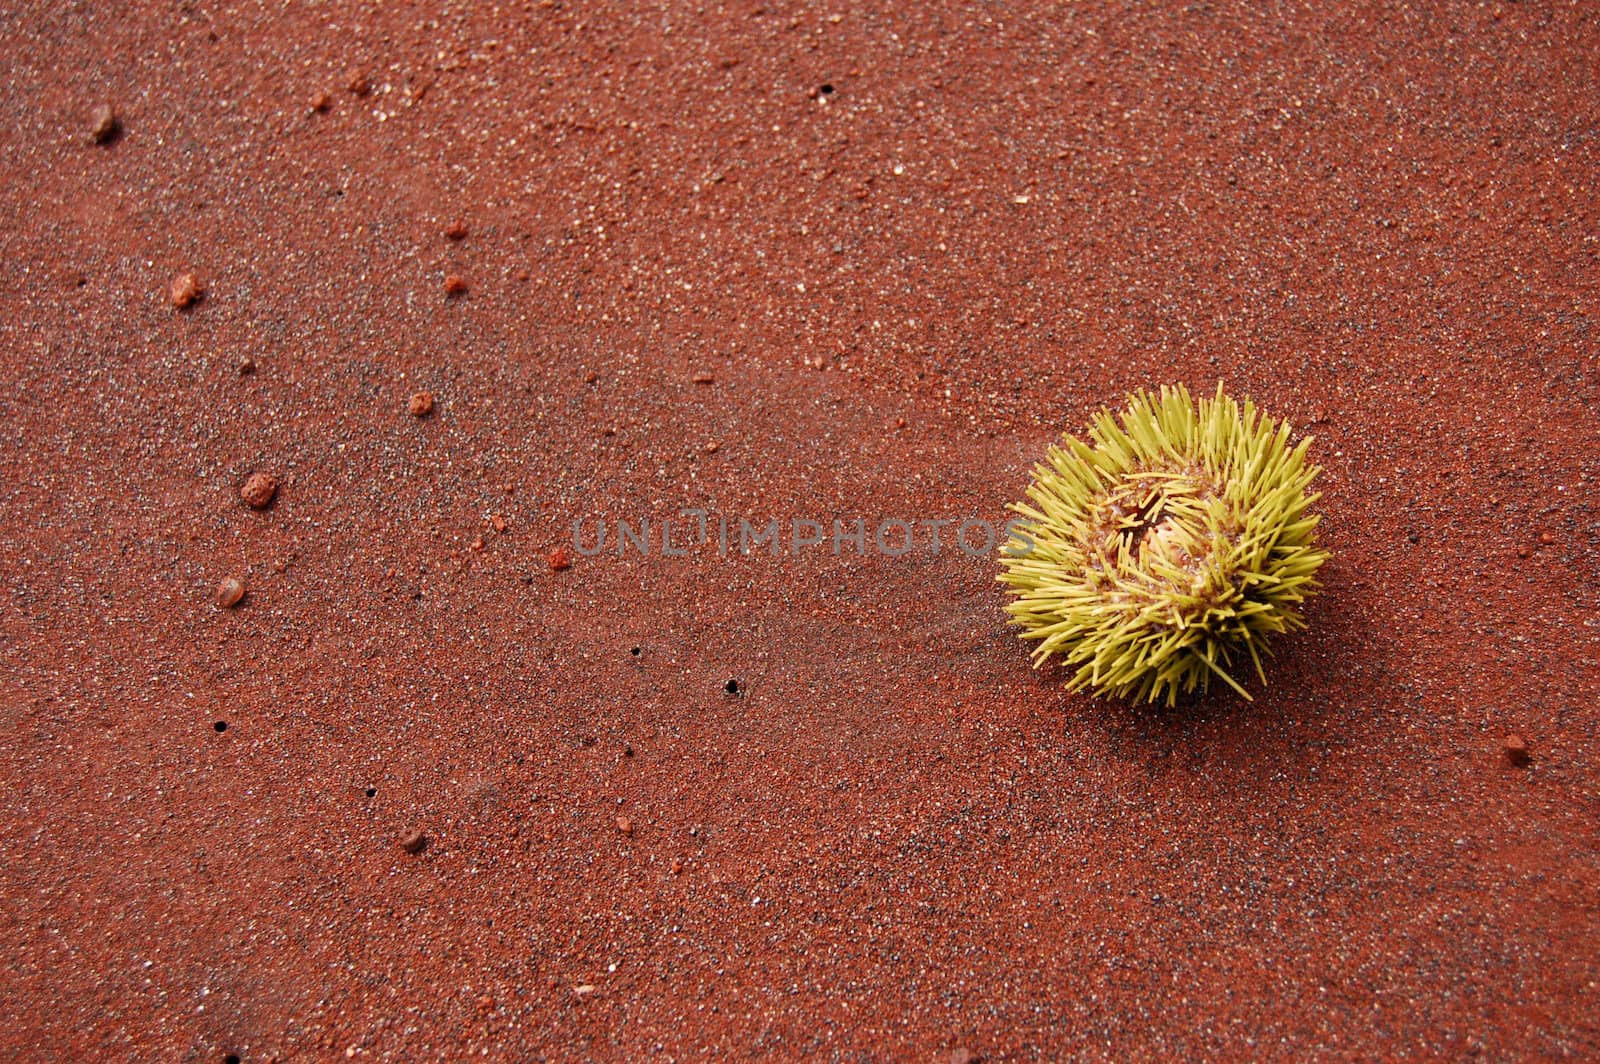 Sea urchin on a red sand beach